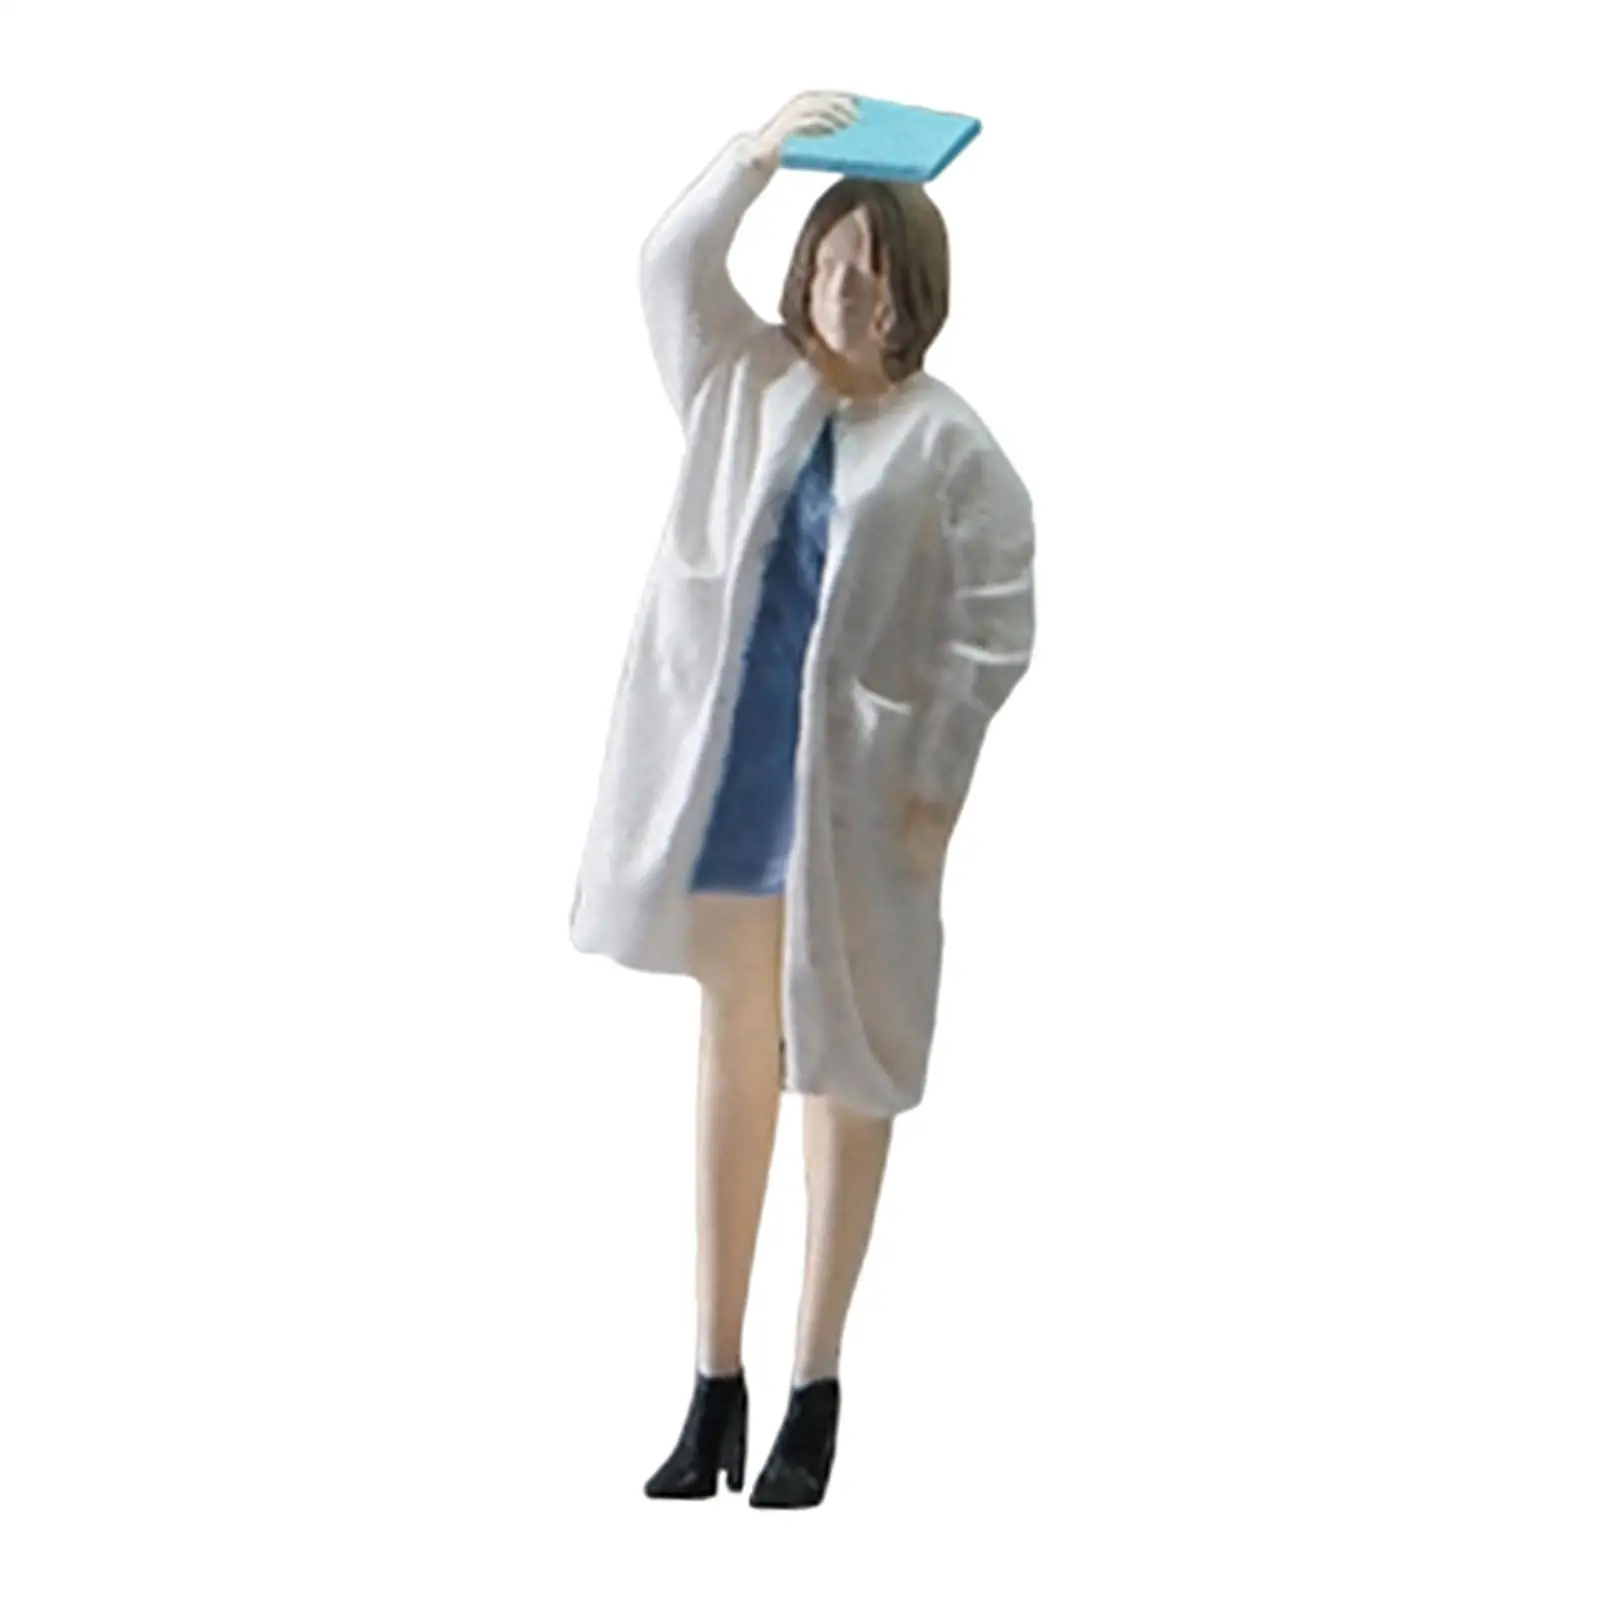 1:32 Doctor Figurine Ornament Realistic Figures Mini People Model 1/32 Scale Miniature Model Figures for Dollhouse Decor